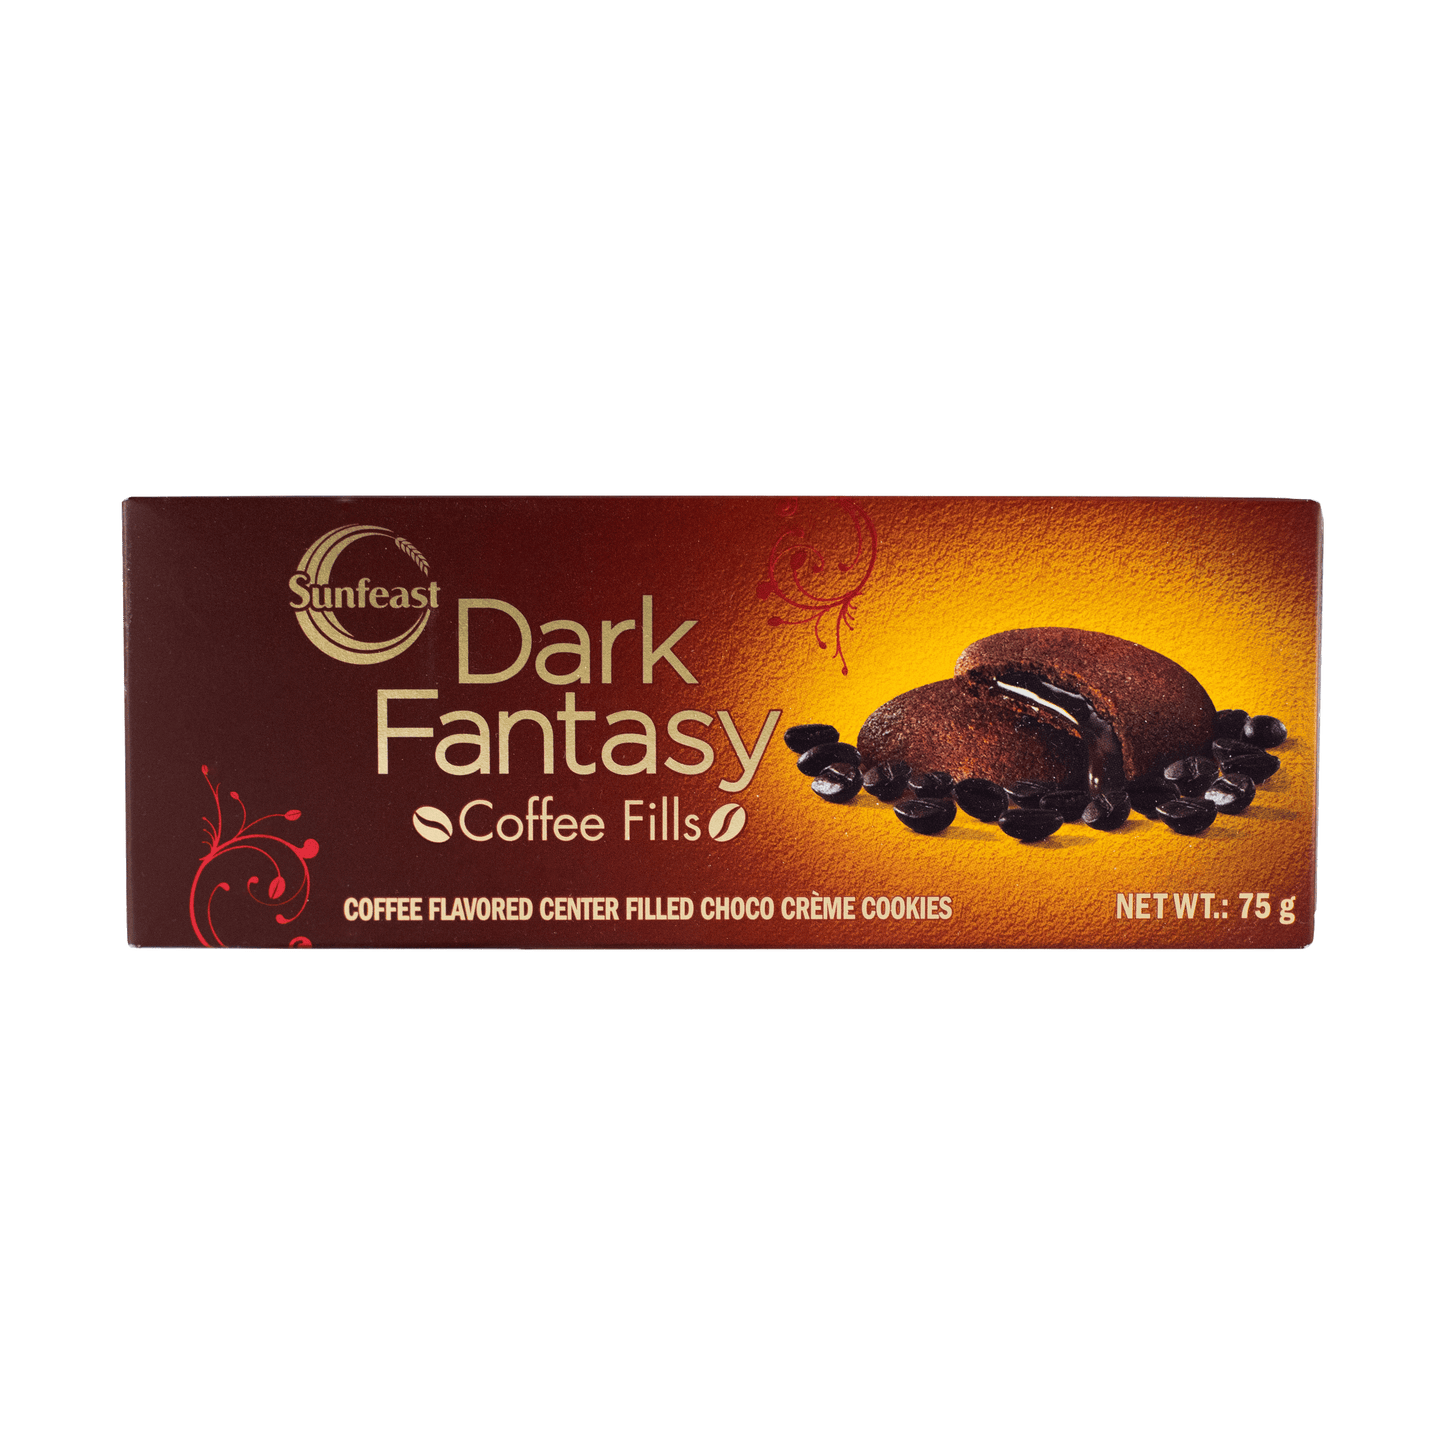 Sunfeast Dark Fantasy - Coffee Fills 75g